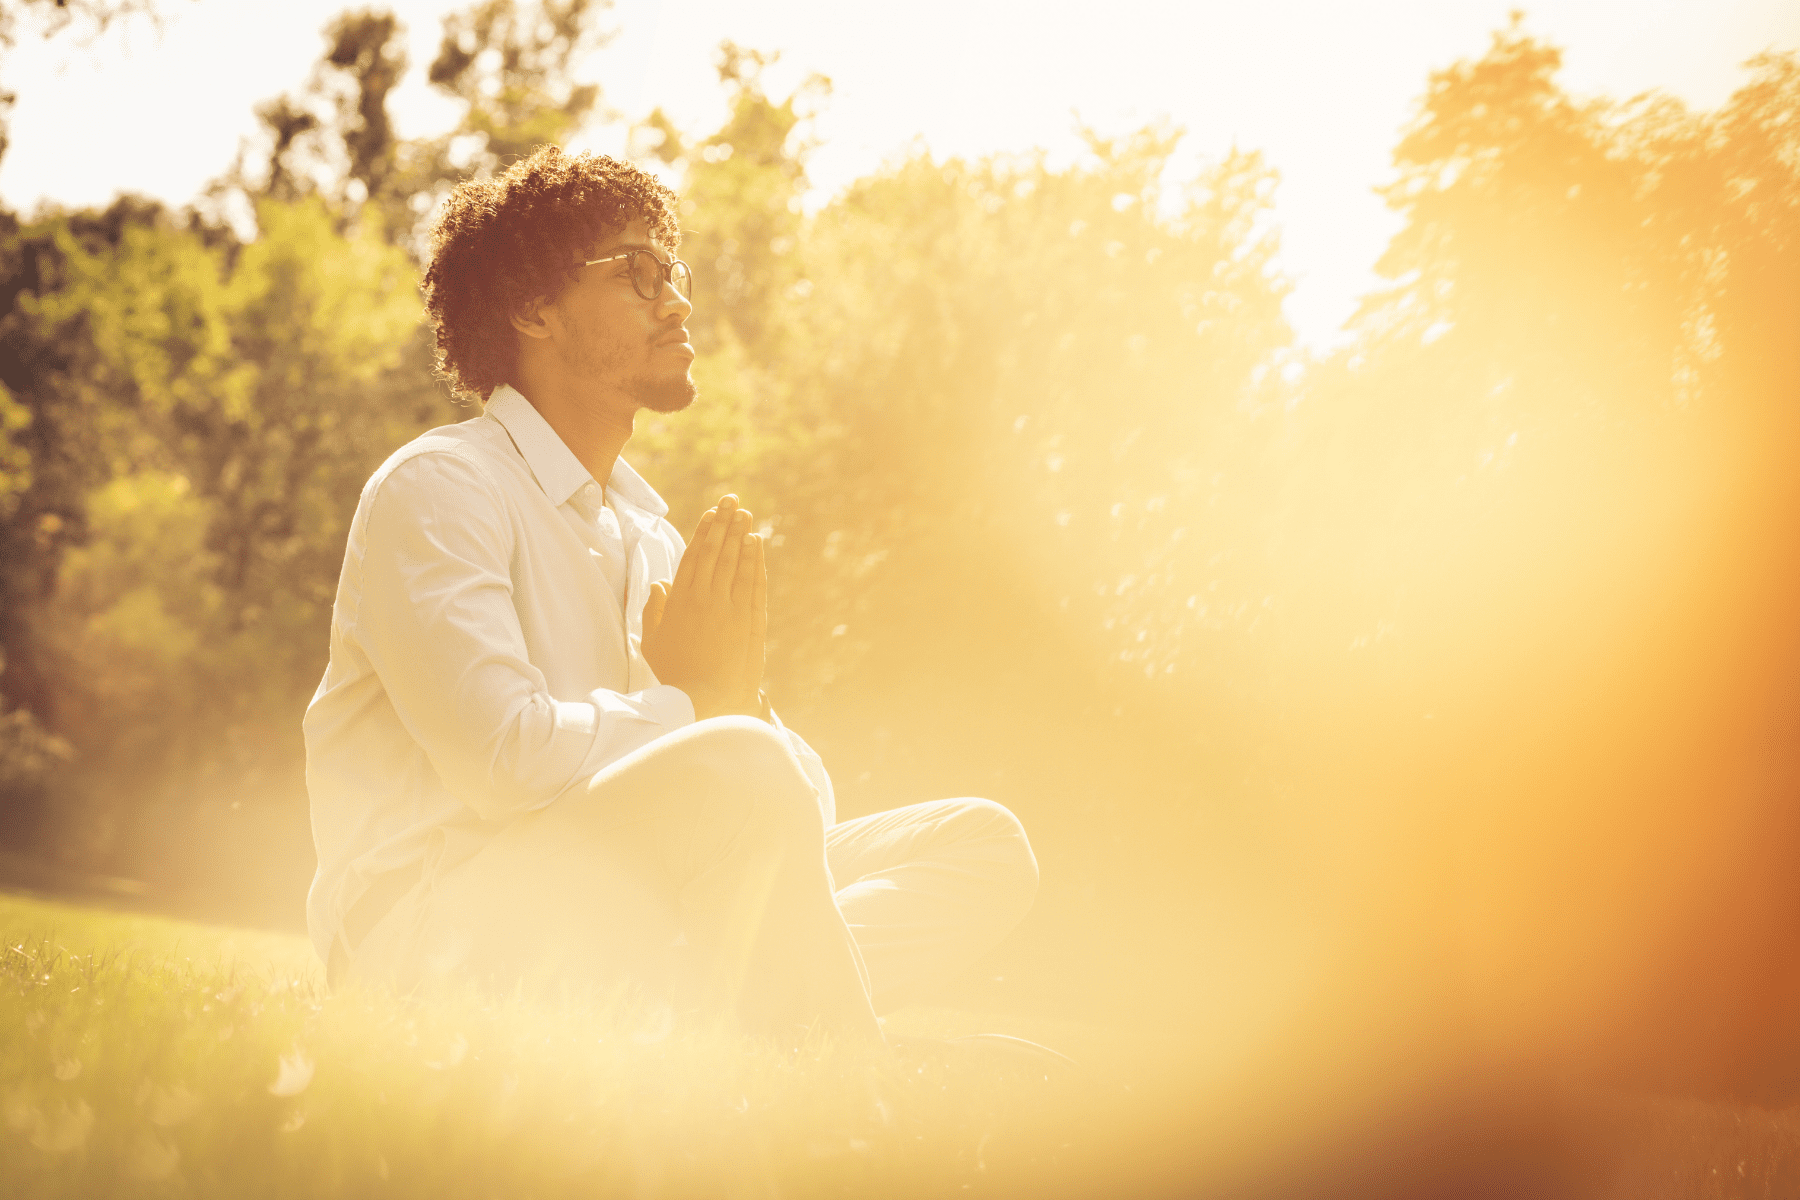 Work As a Life-affirming Meditation Practice